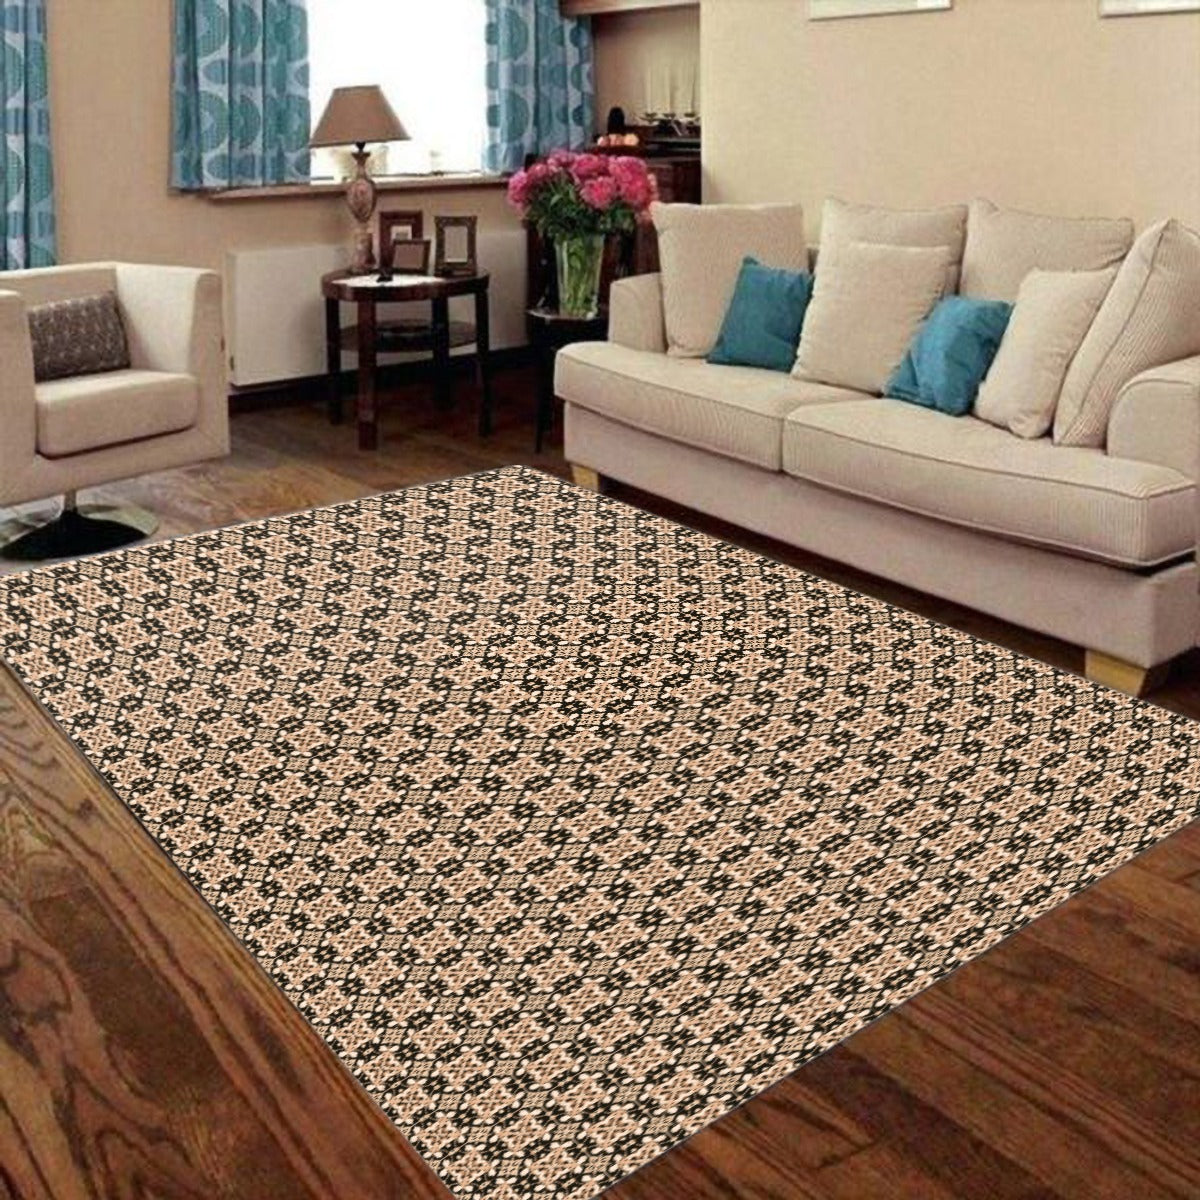 AC BAROQUE Foldable Rectangular Floor Mat